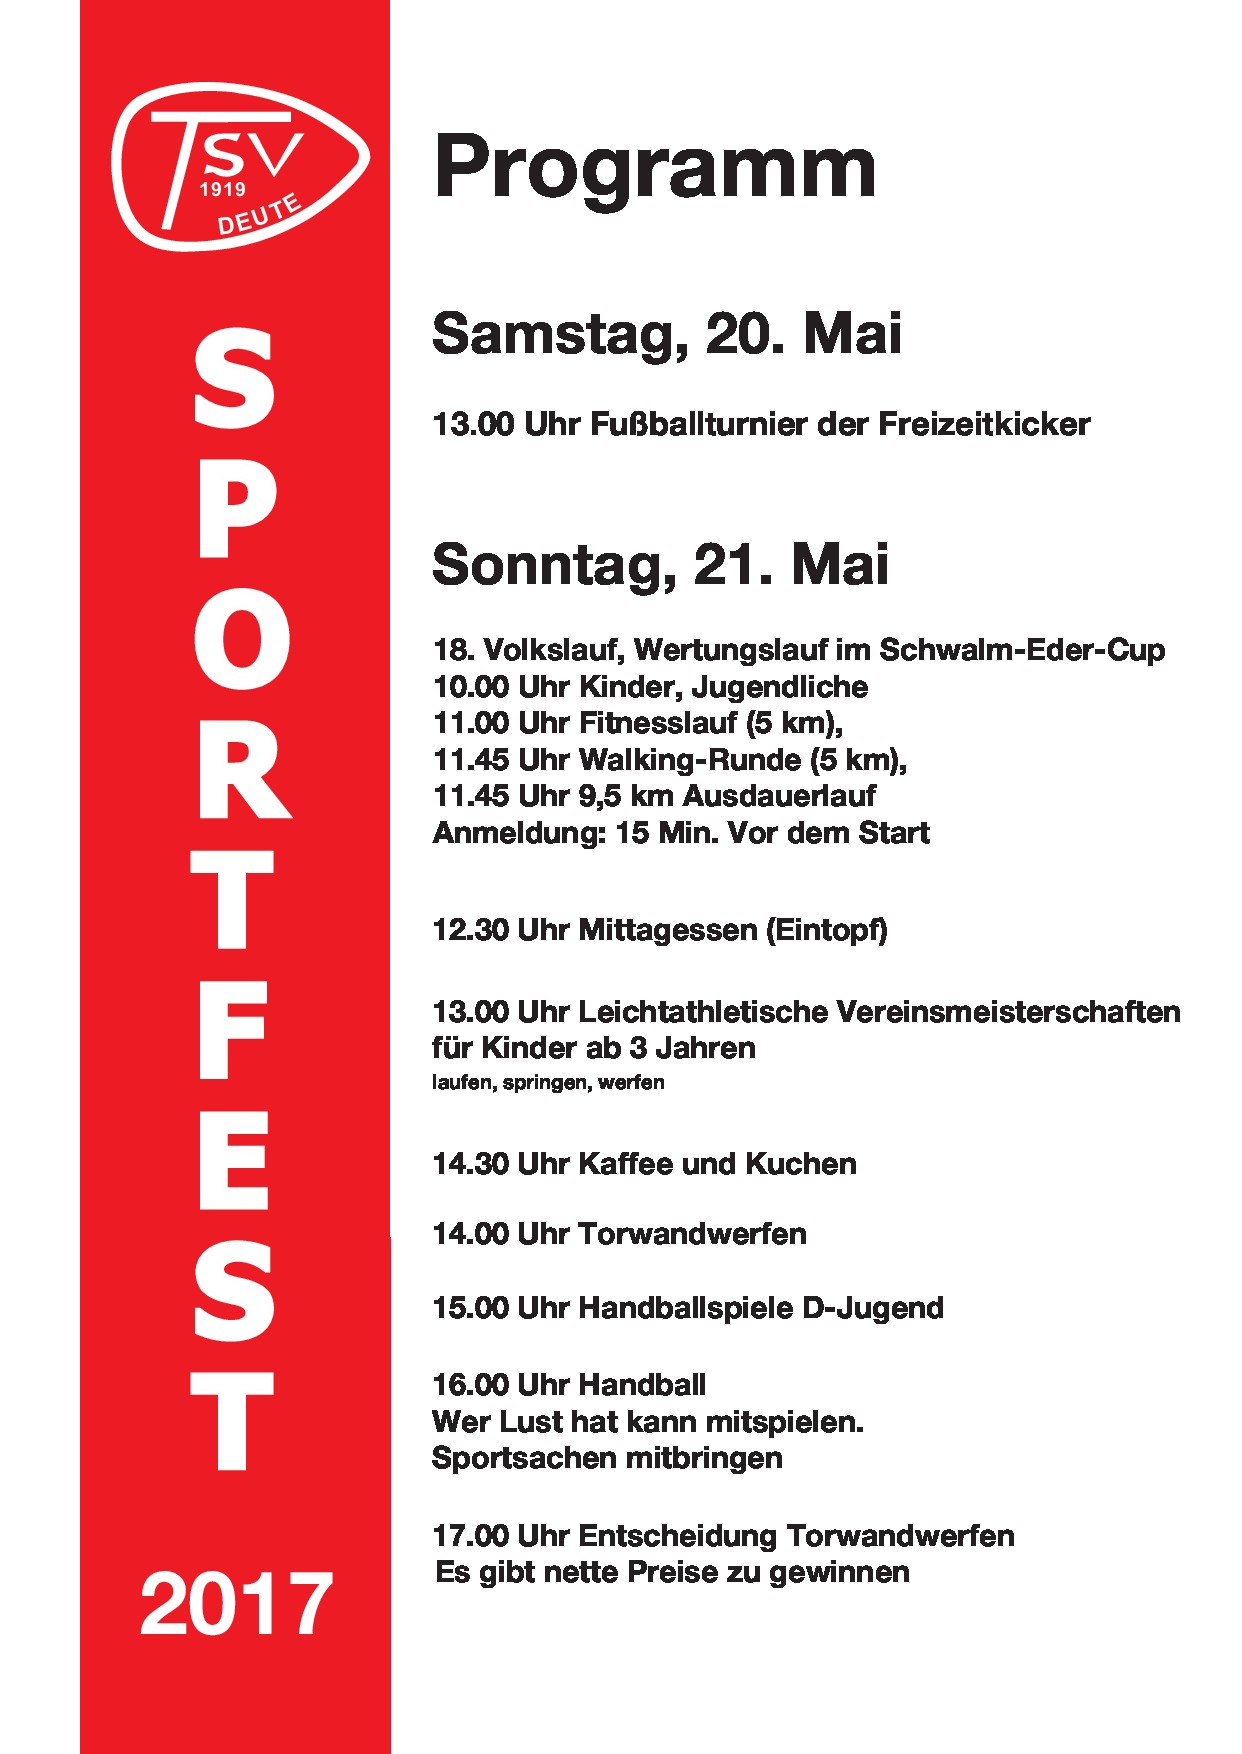 TSV Deute Sportfest Programm 2017